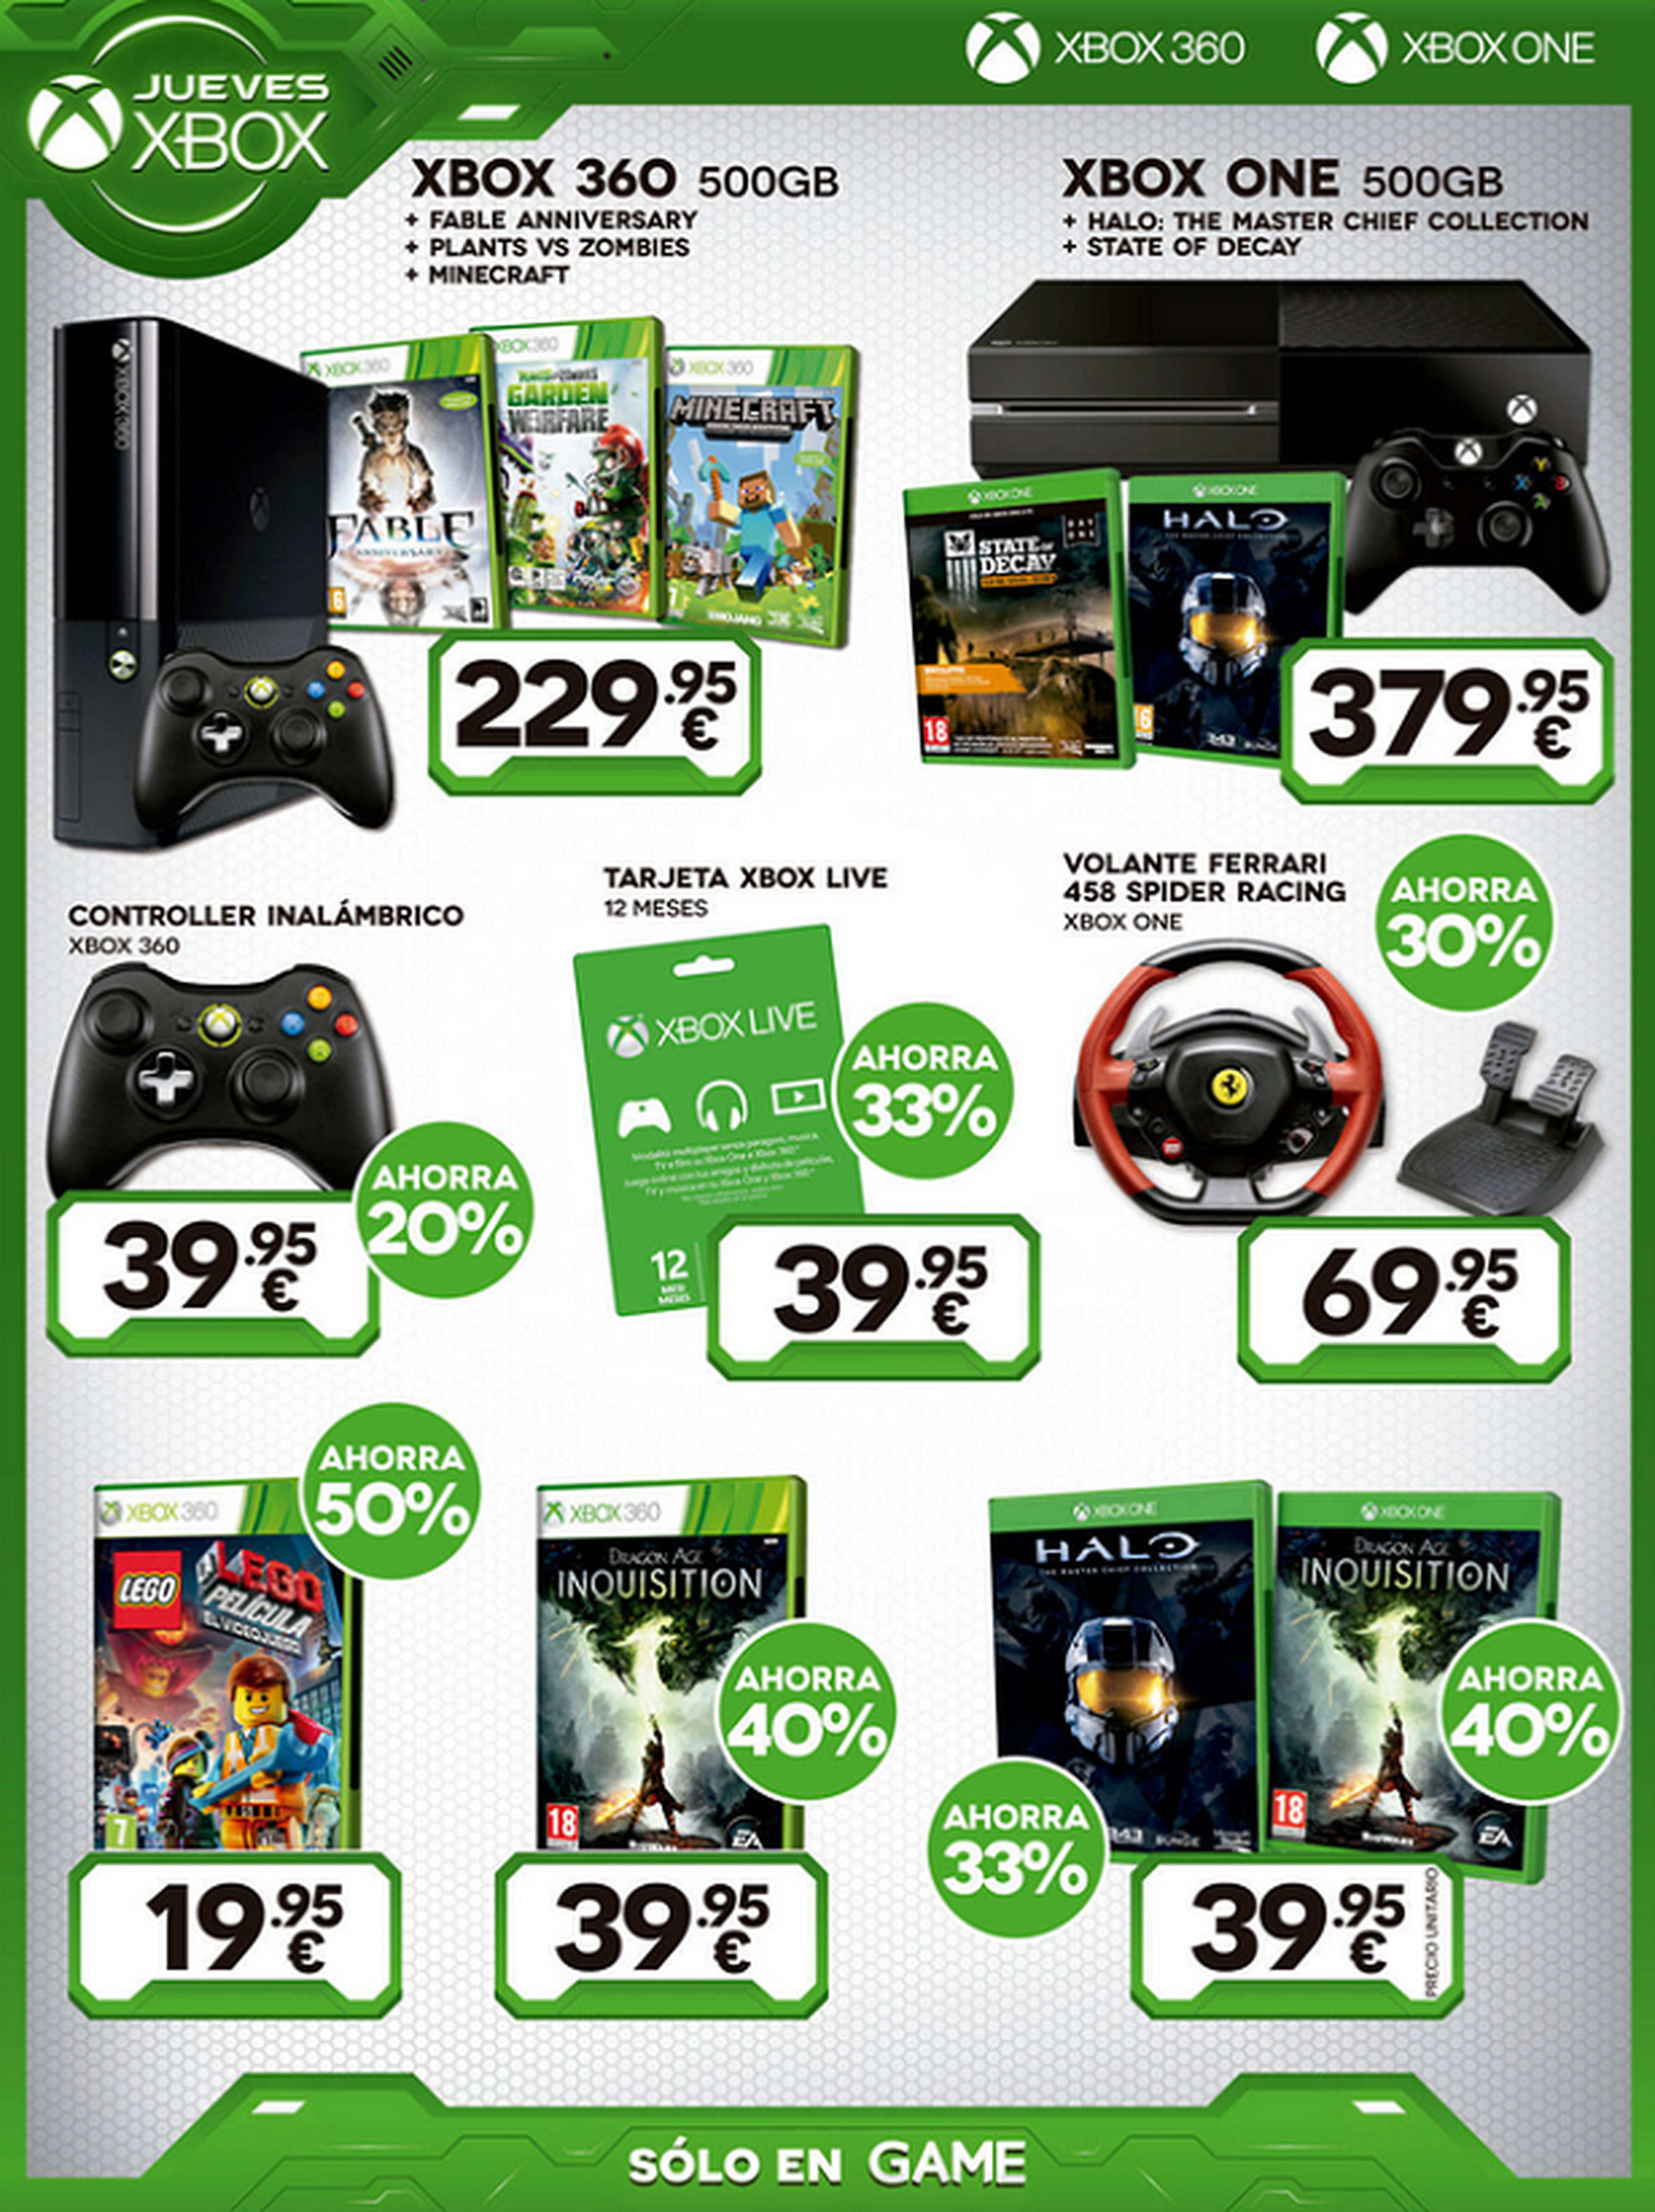 Jueves Xbox en GAME: novena semana de ofertas